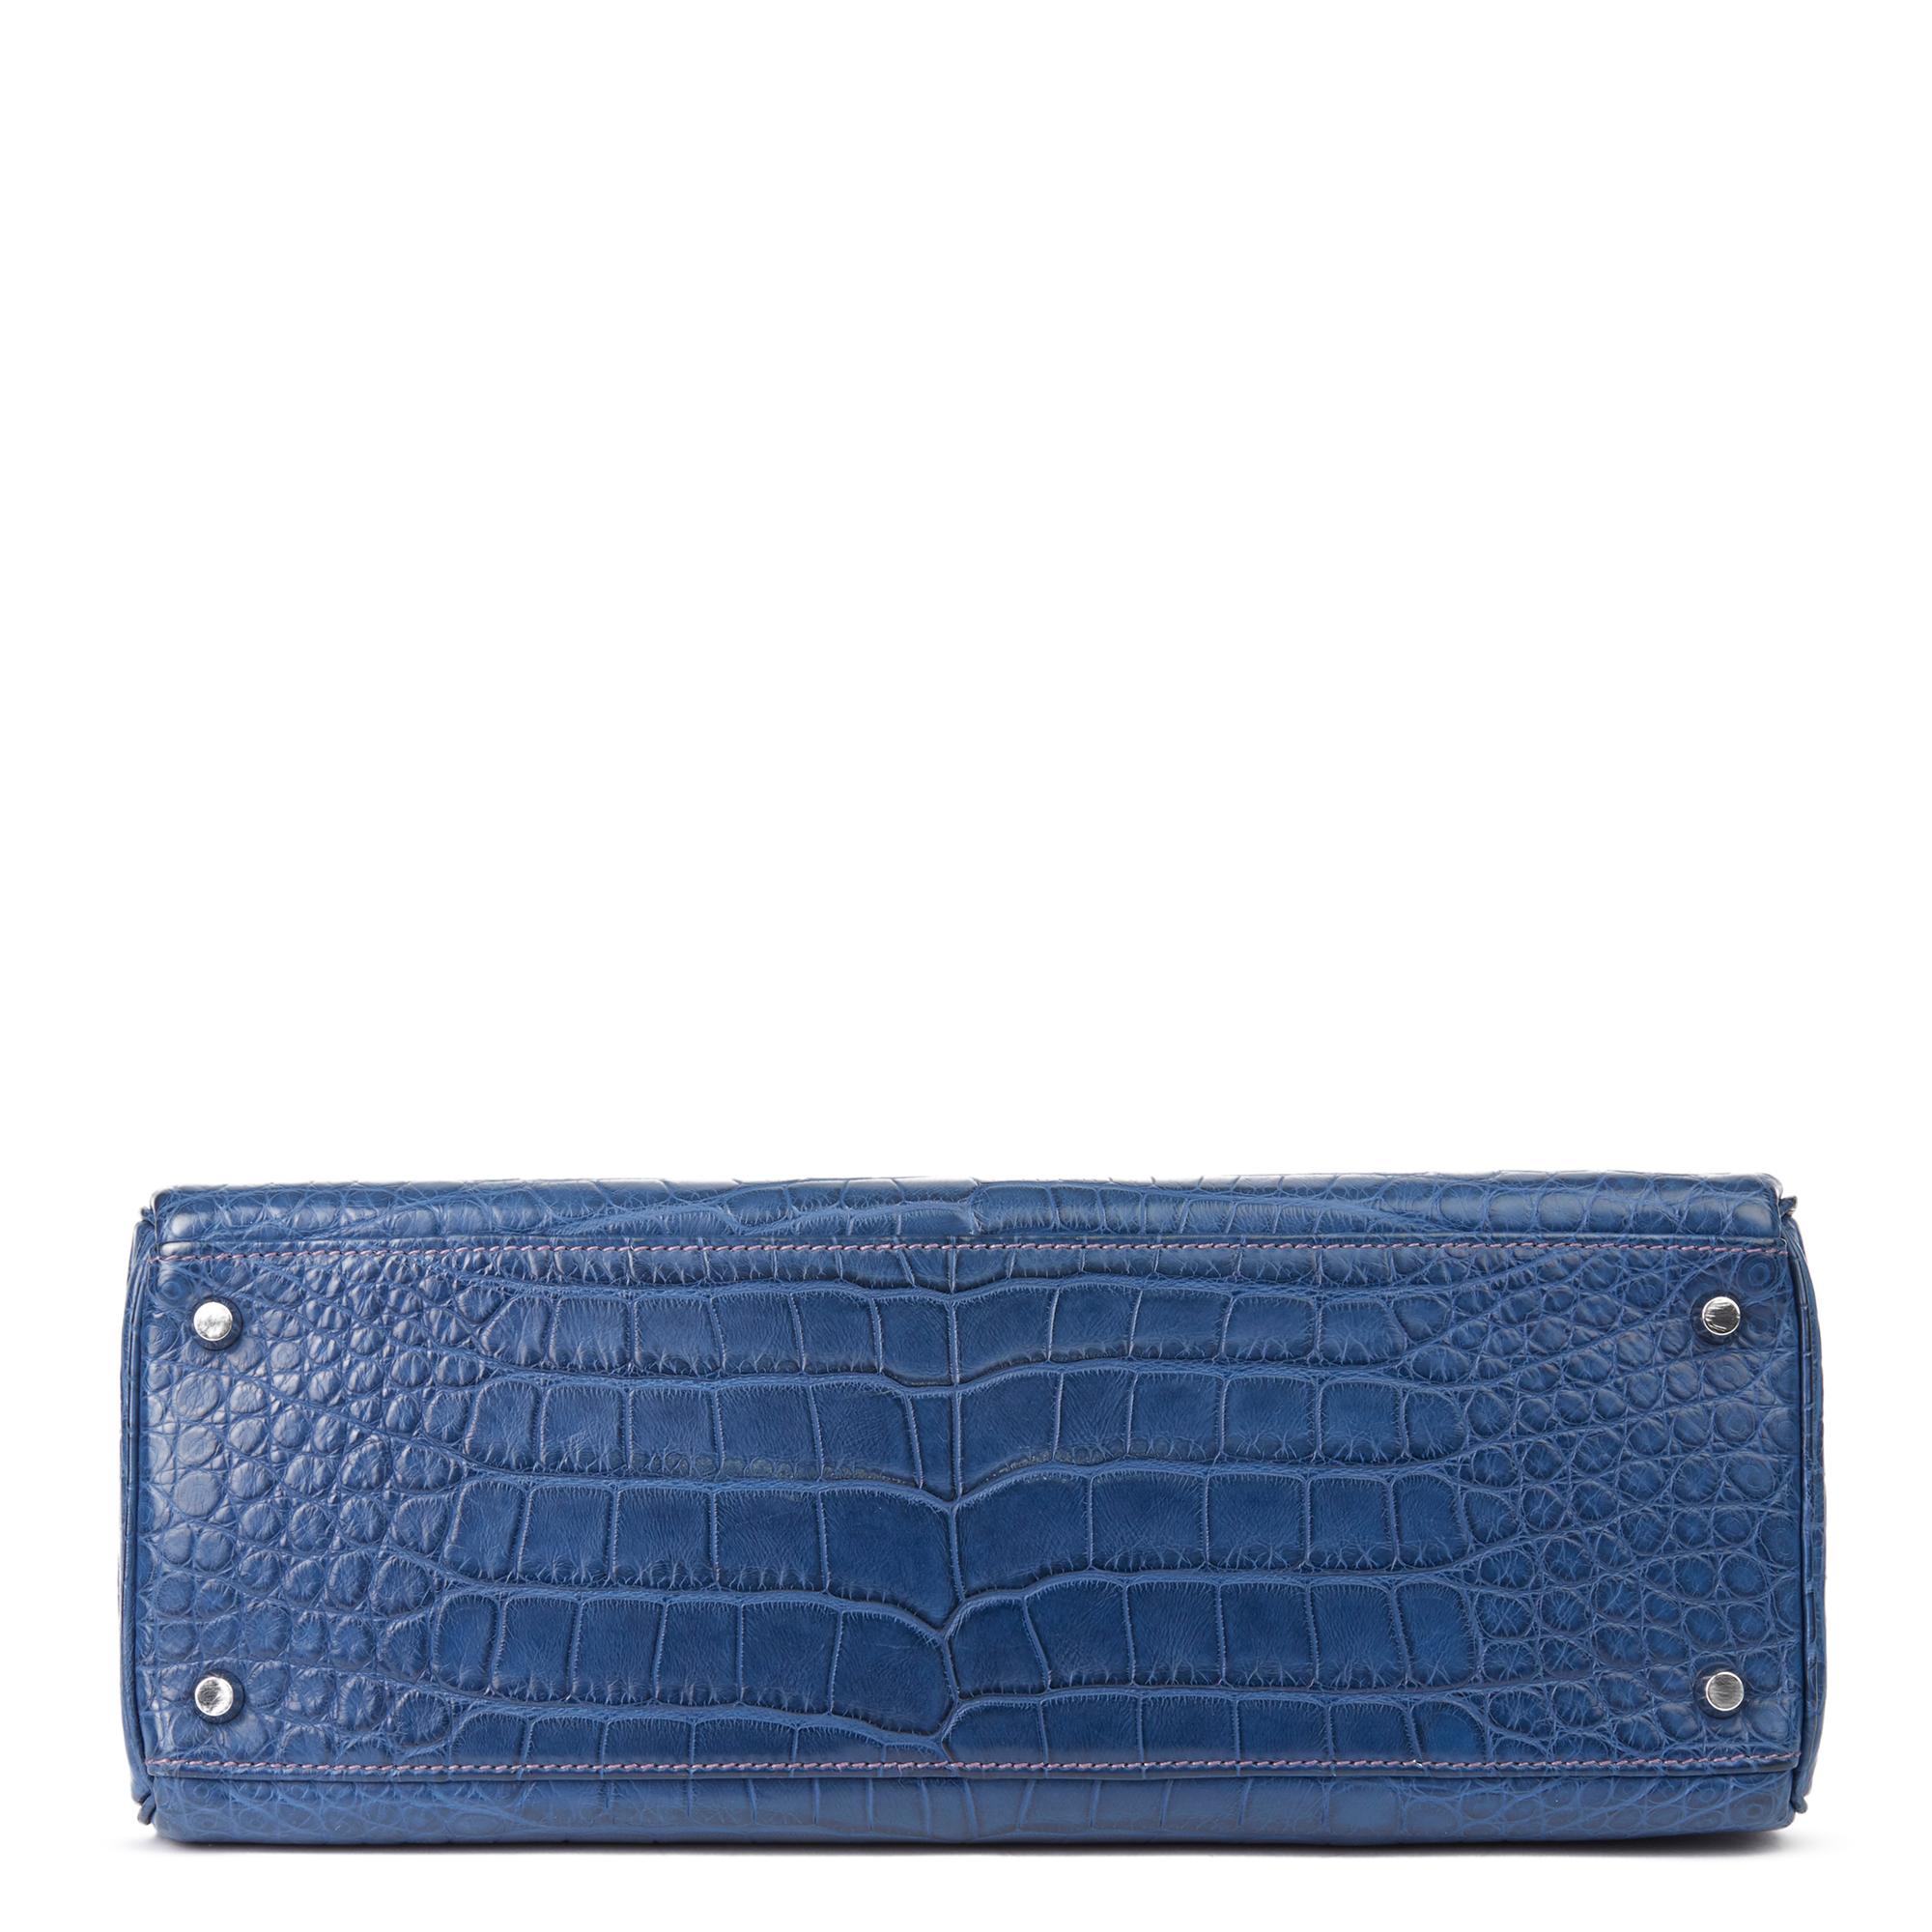 Women's 2011 Hermès Bleu de Malte & Anemone Matte Alligator Leather Kelly 35cm Retourne